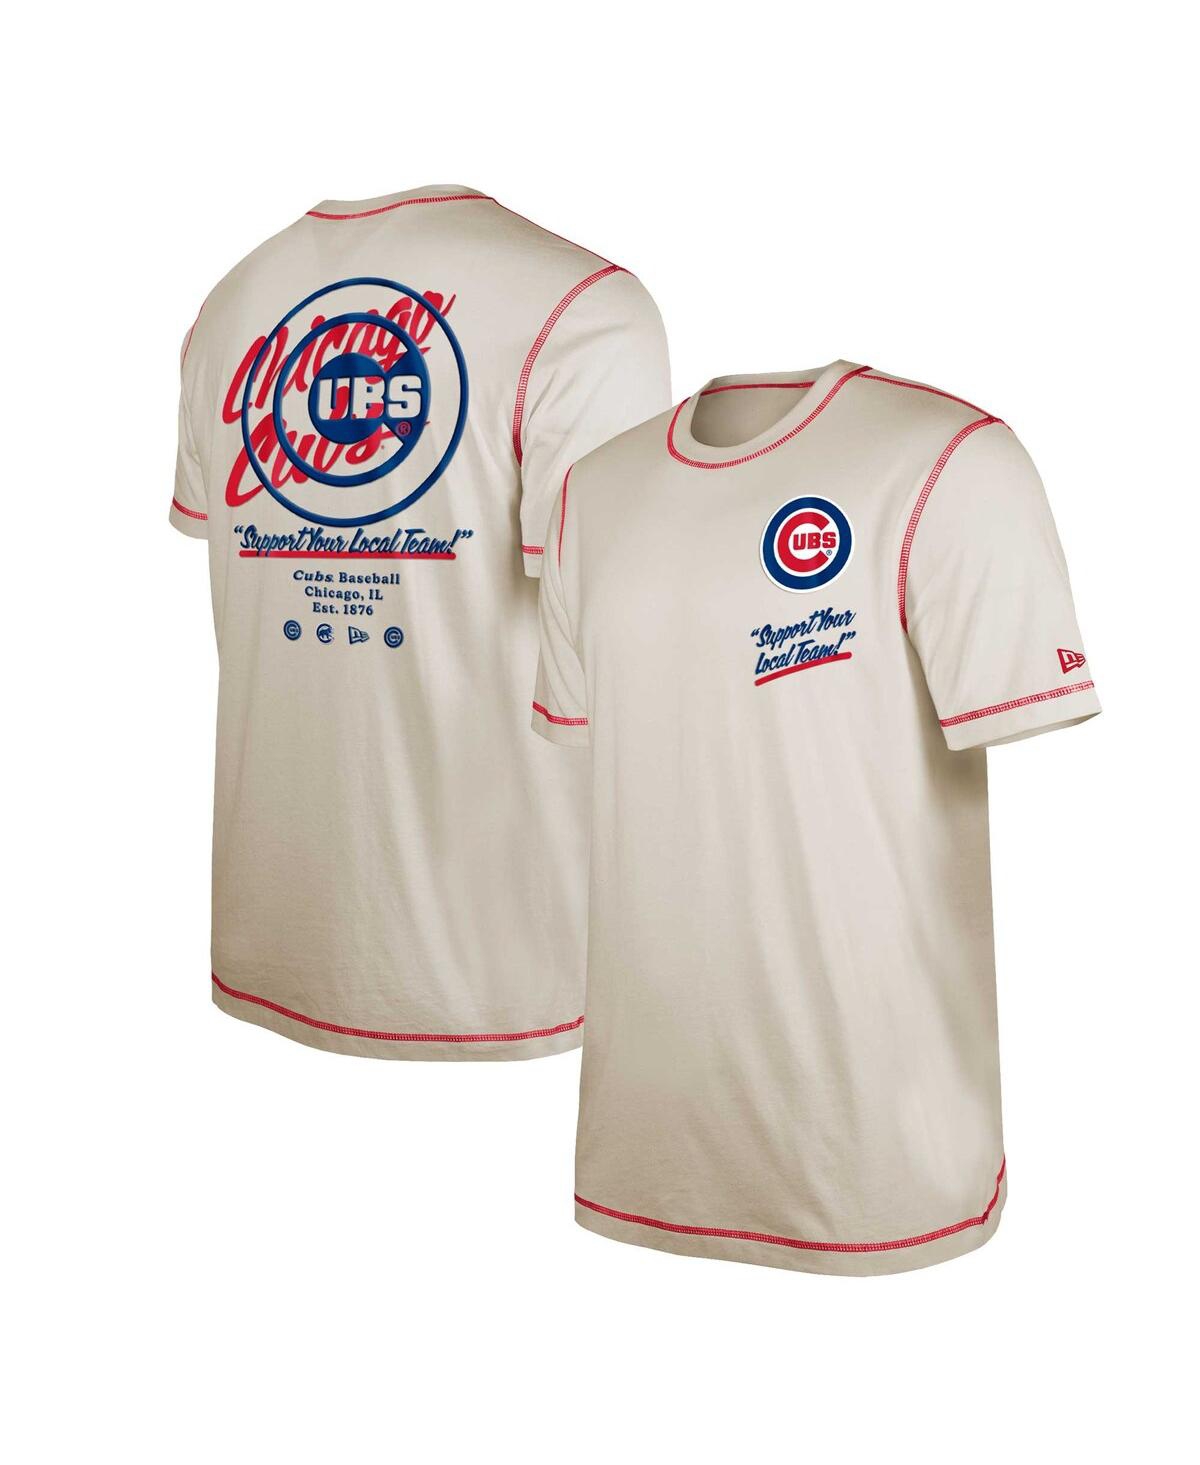 New Era Men's NY Yankees Camp T-Shirt in Cream - Size Large